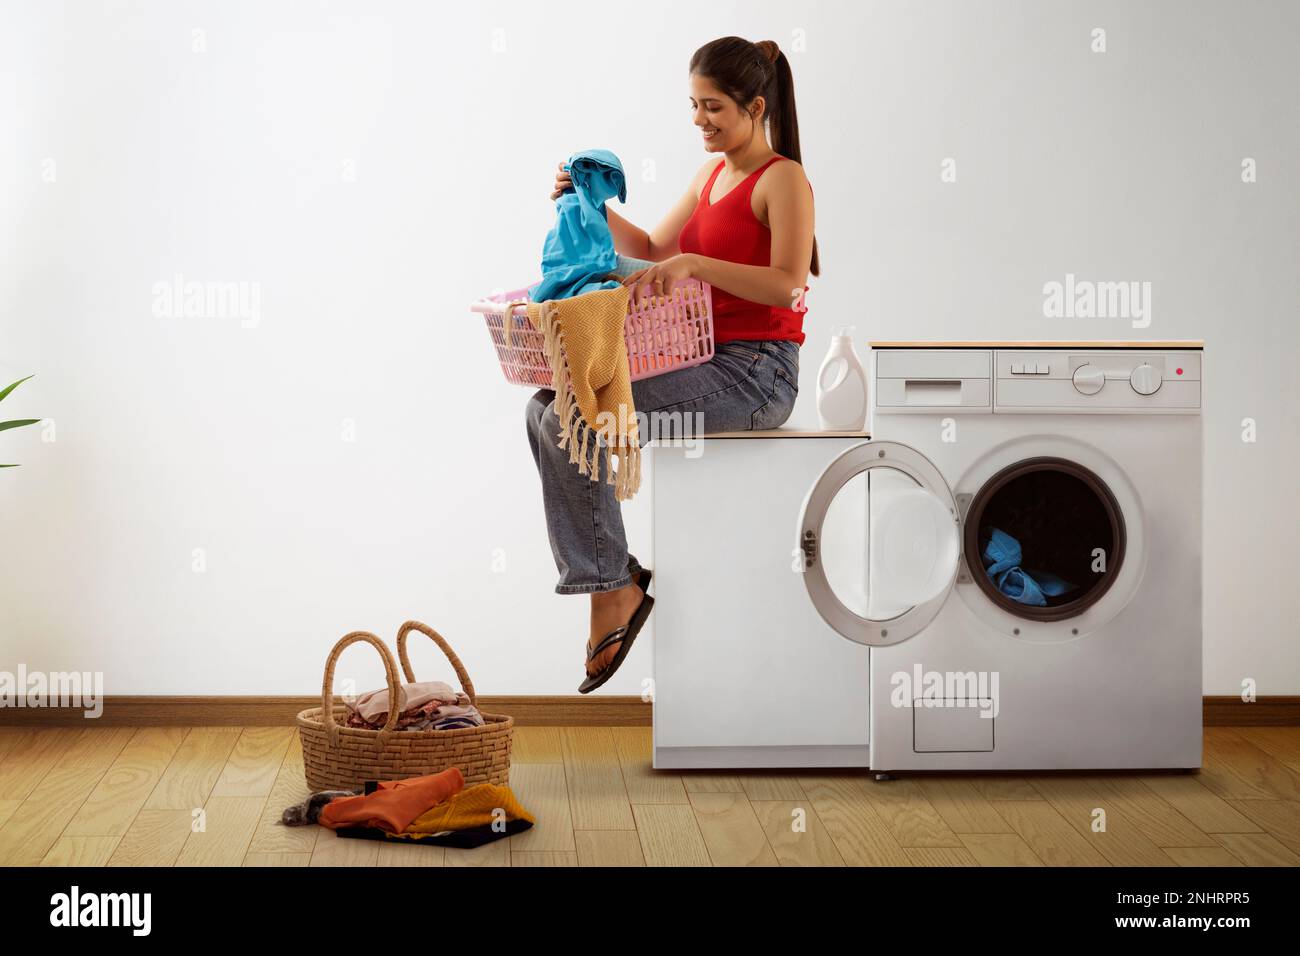 Young woman sitting near washing machine with laundry basket Stock Photo